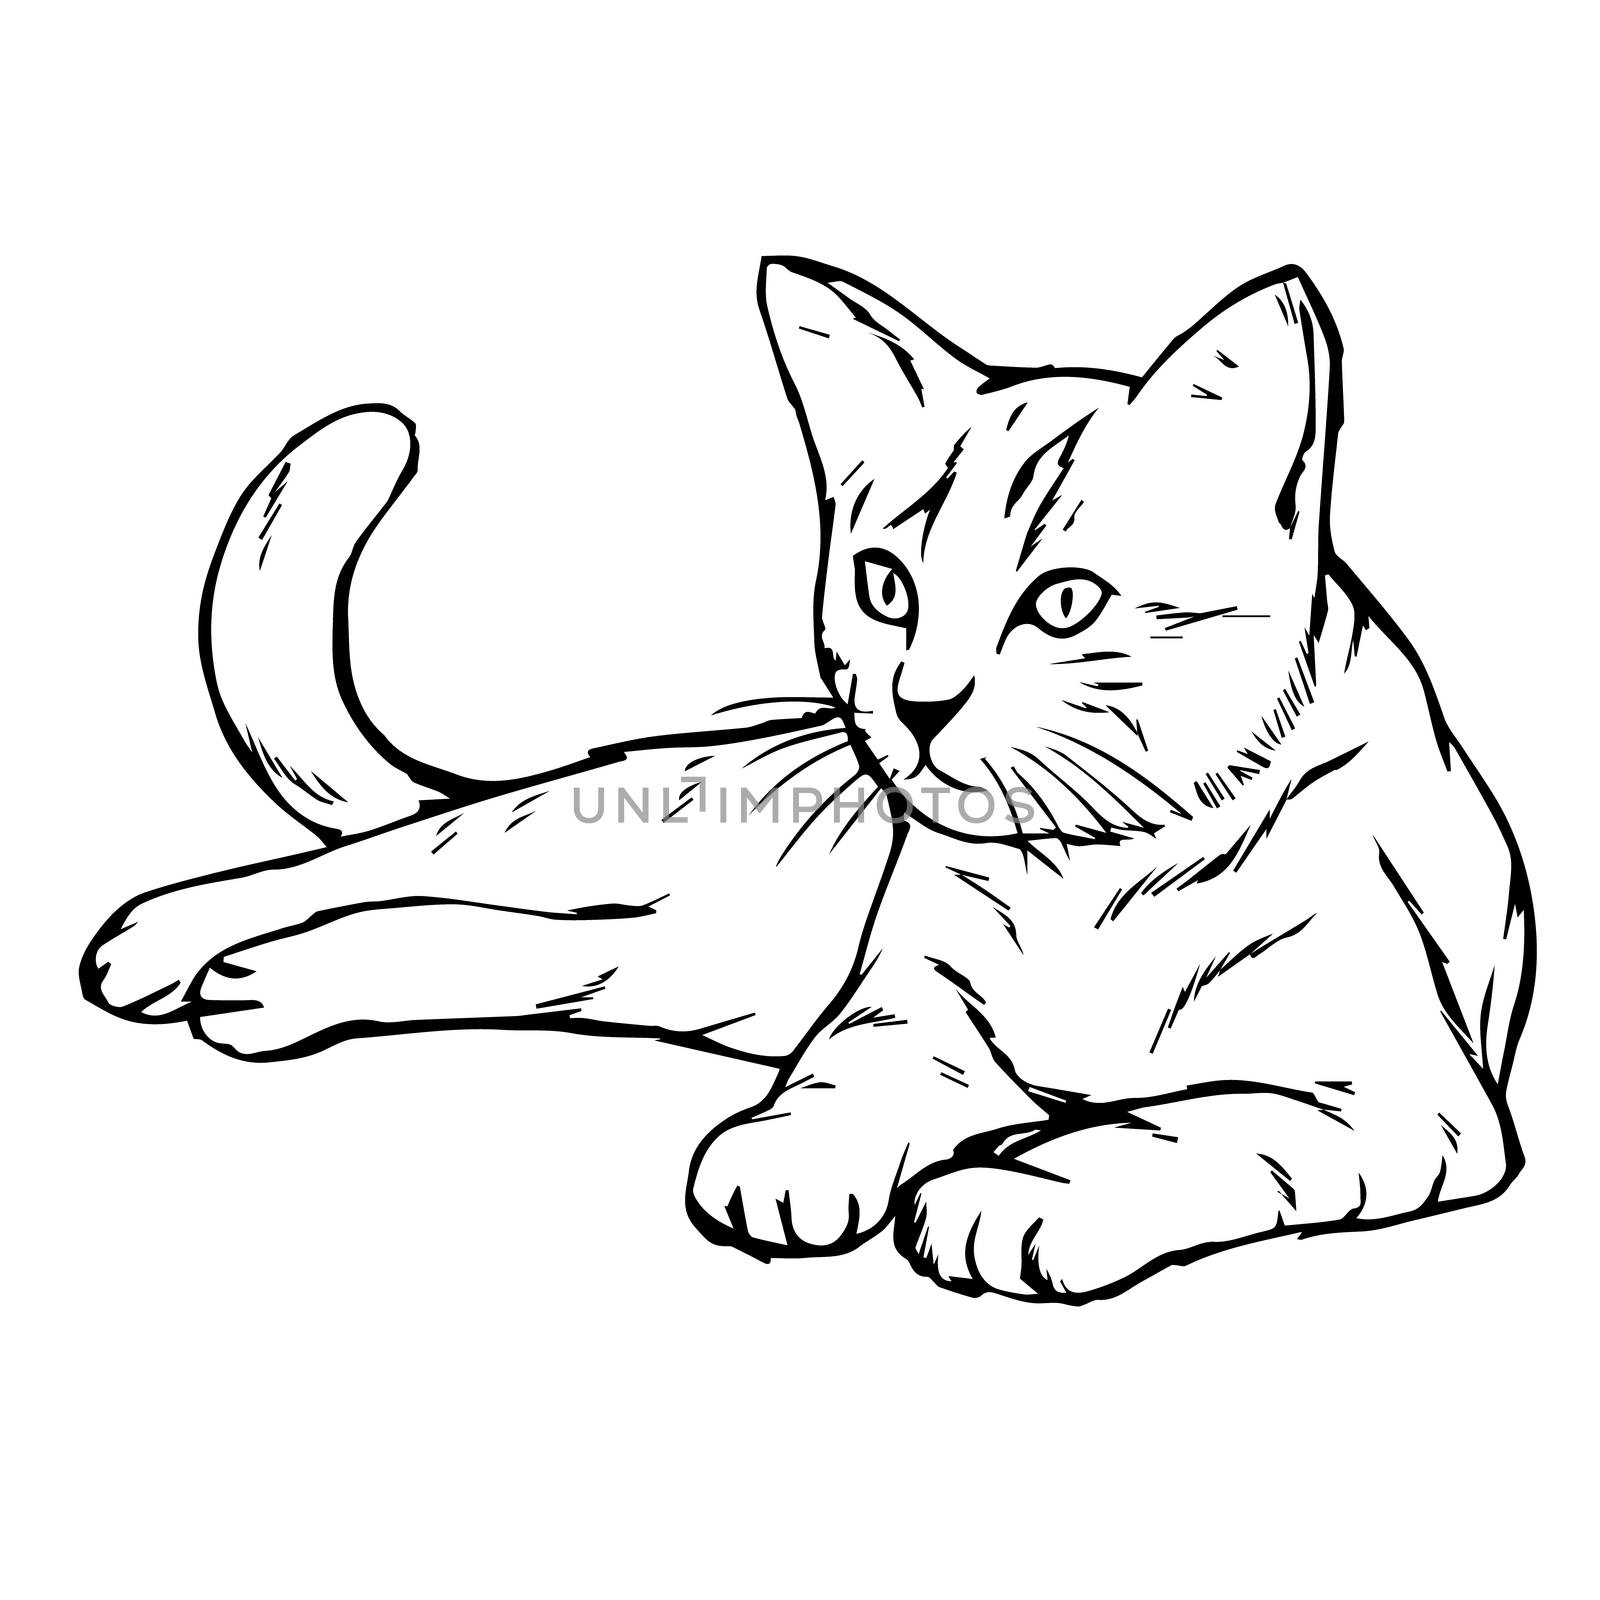 Cat Kitten hand drawn by simpleBE